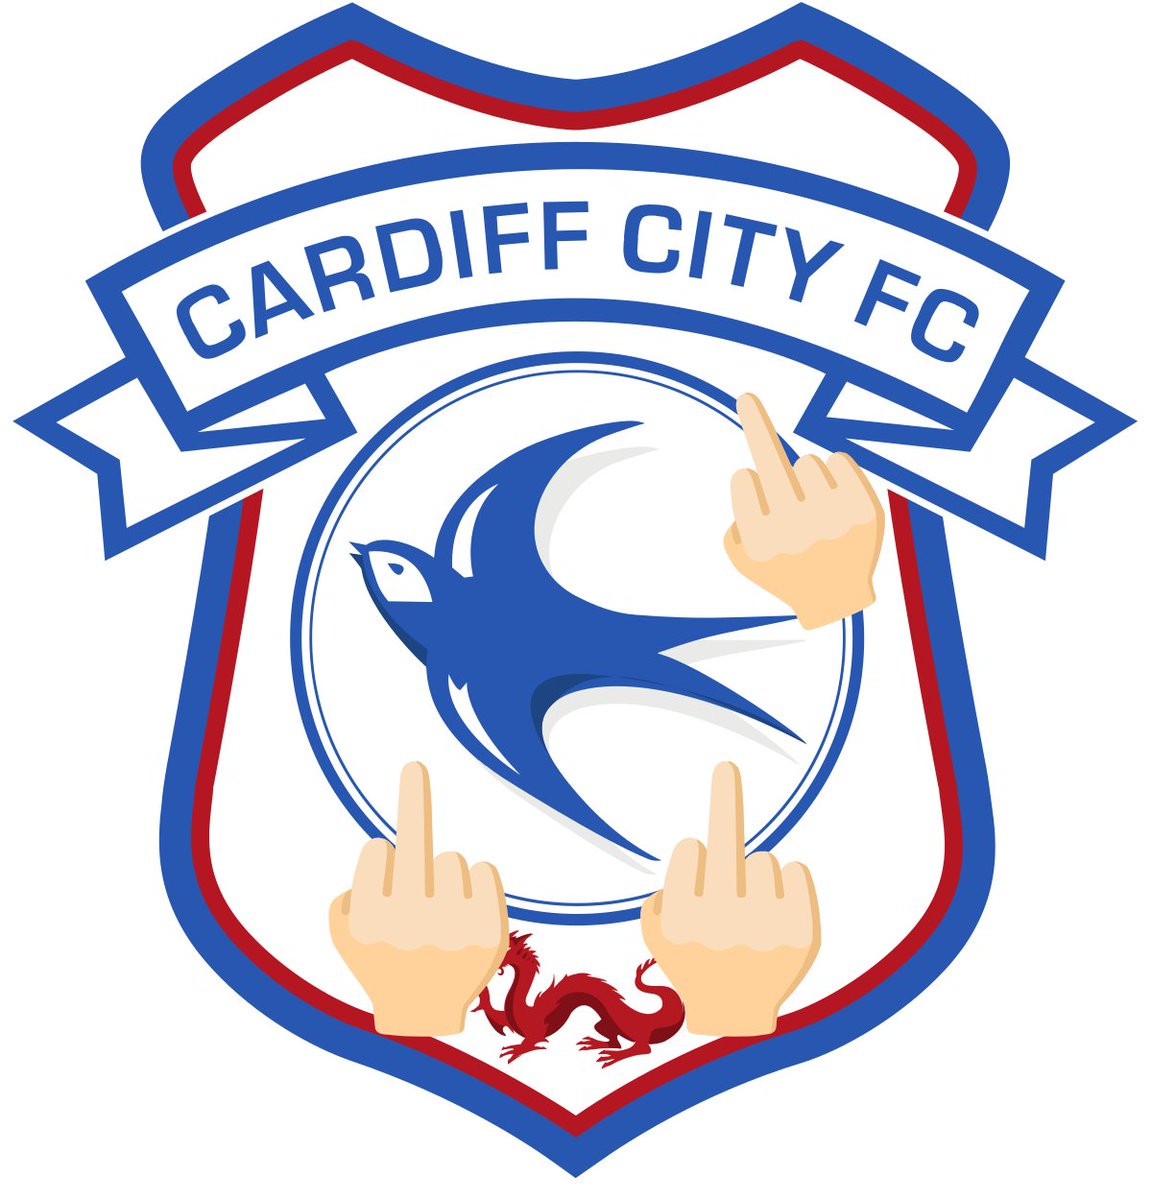 Day 2. Fuck CardiffCity #CardiffCity